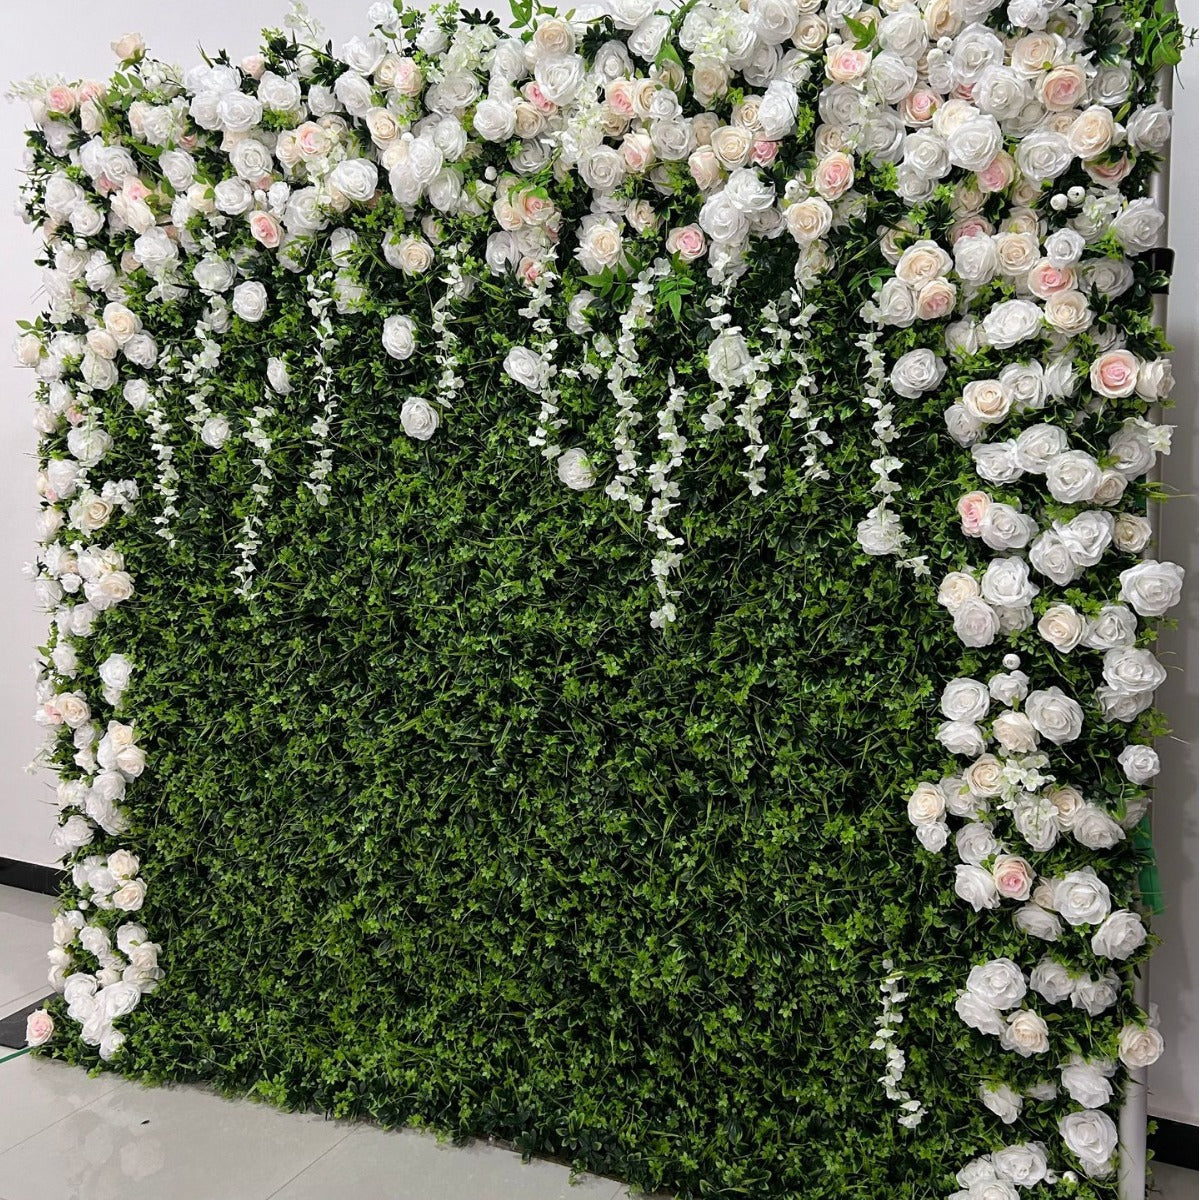 3D Artificial Flower Wall Arrangement Wedding Party Birthday Backdrop Decor HQ3999